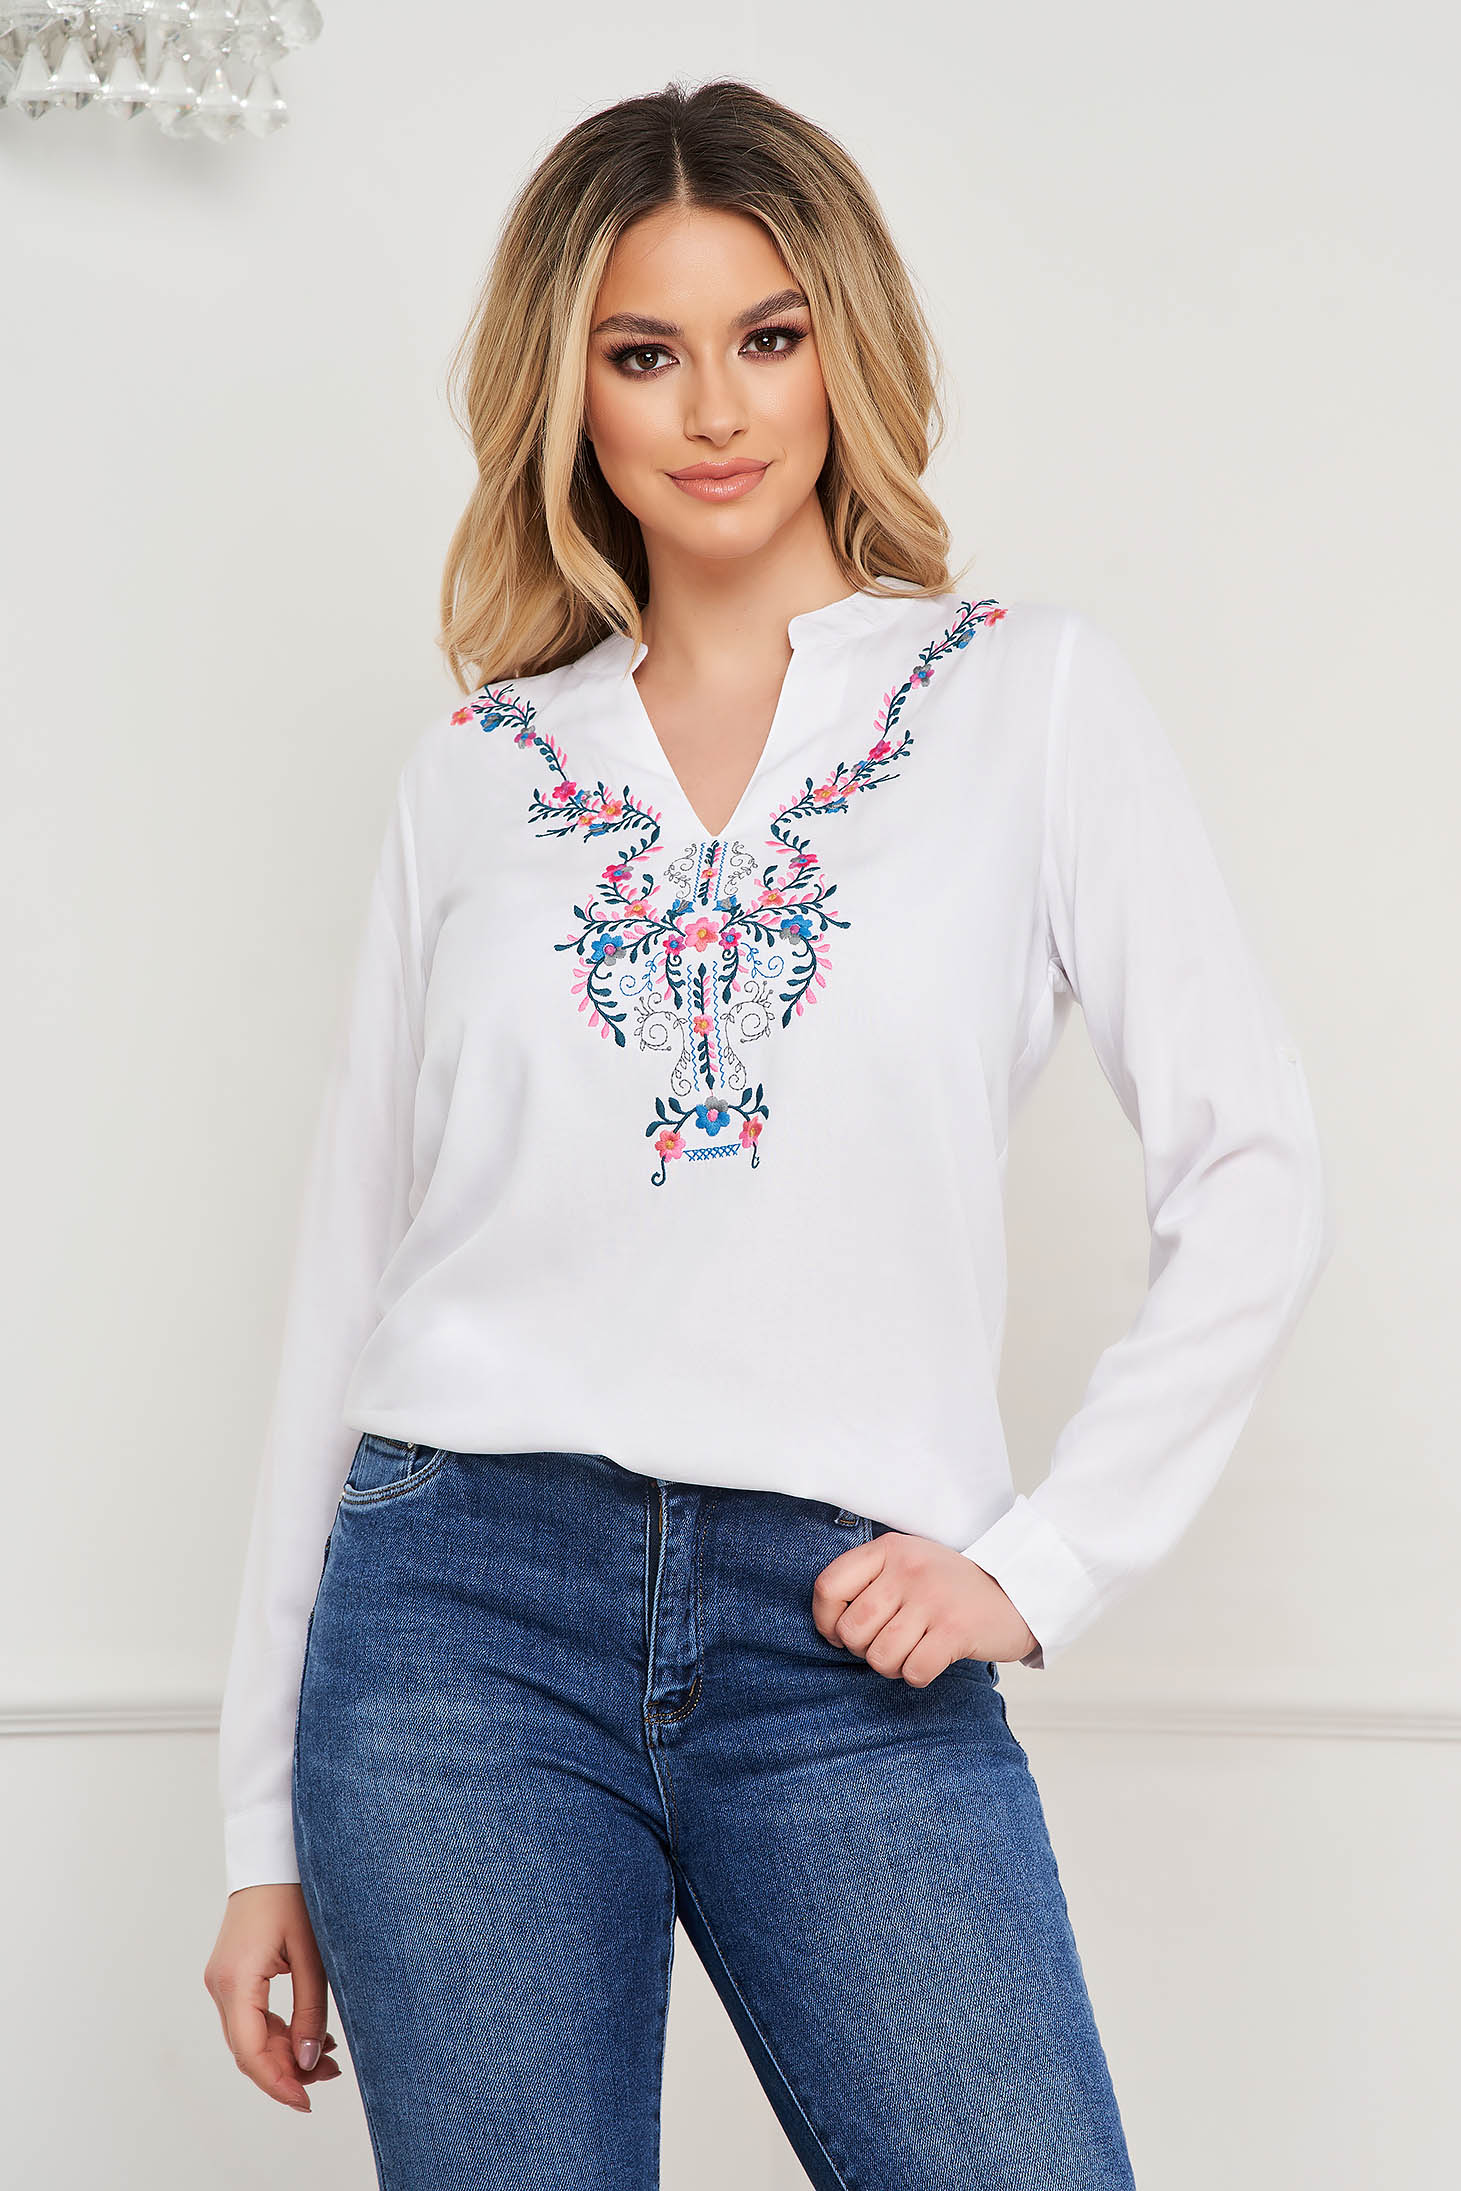 White women`s blouse loose fit cotton